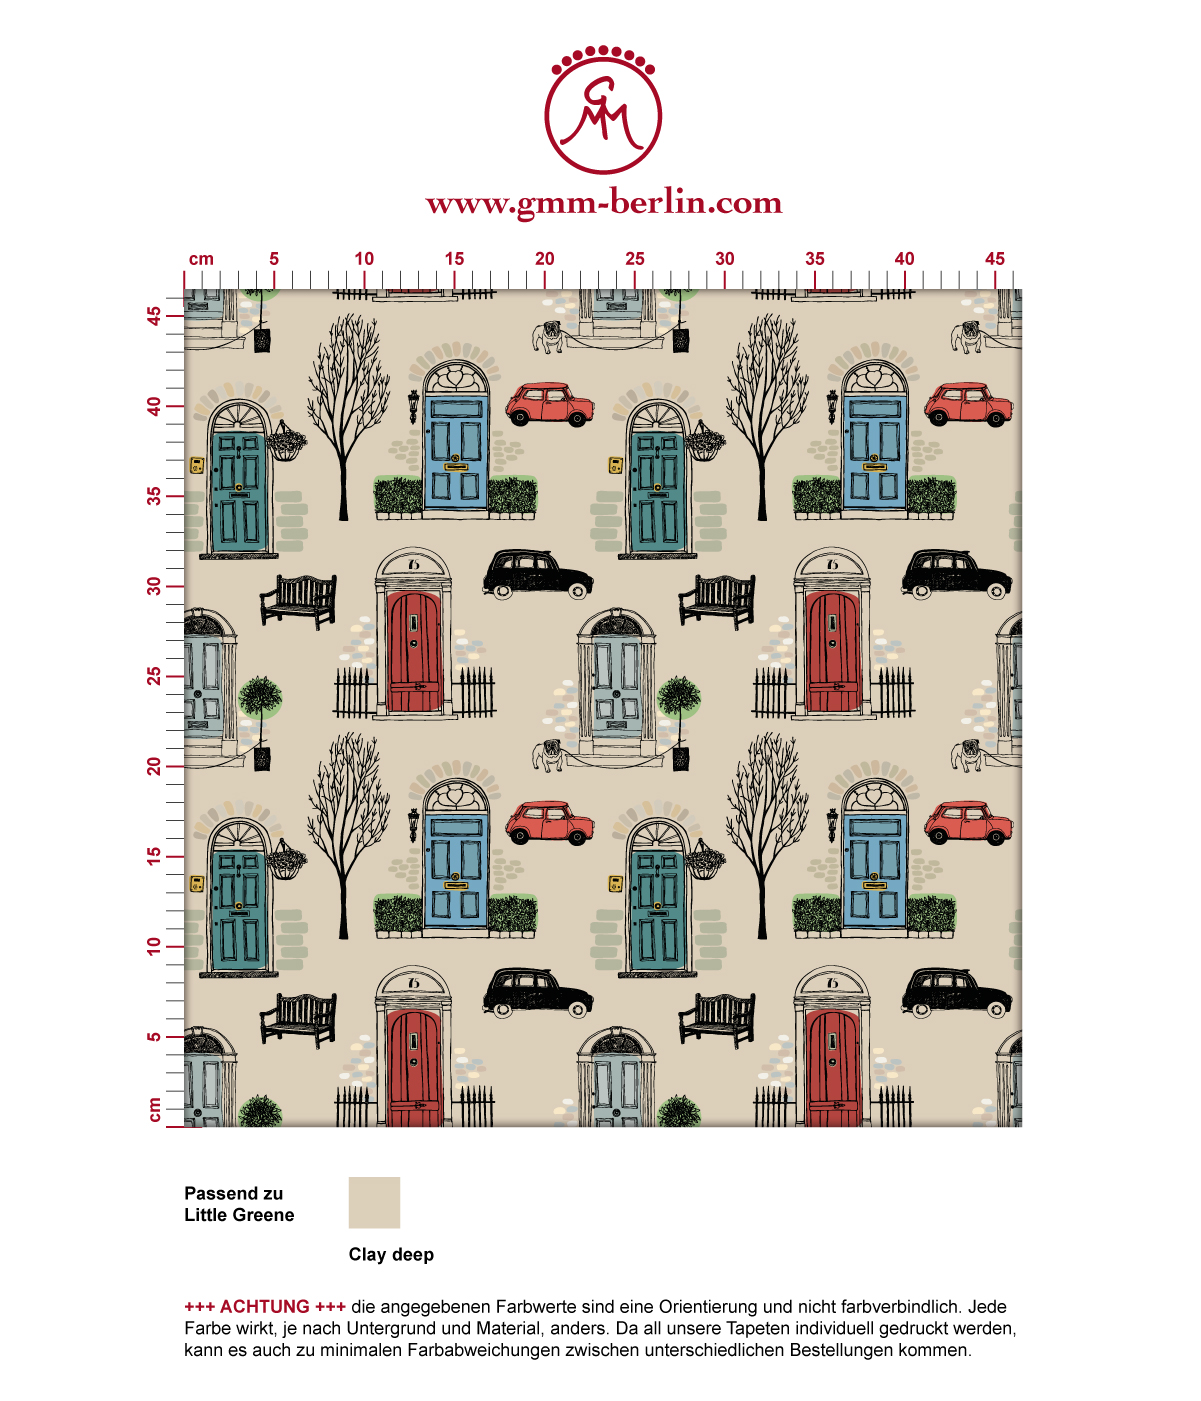 Haustüren Tapete "Belgravia" mit Londoner Türen, Mini und Cabs in rot angepasst an Little Greene Wandfarben. Aus dem GMM-BERLIN.com Sortiment: Schöne Tapeten in creme Farbe